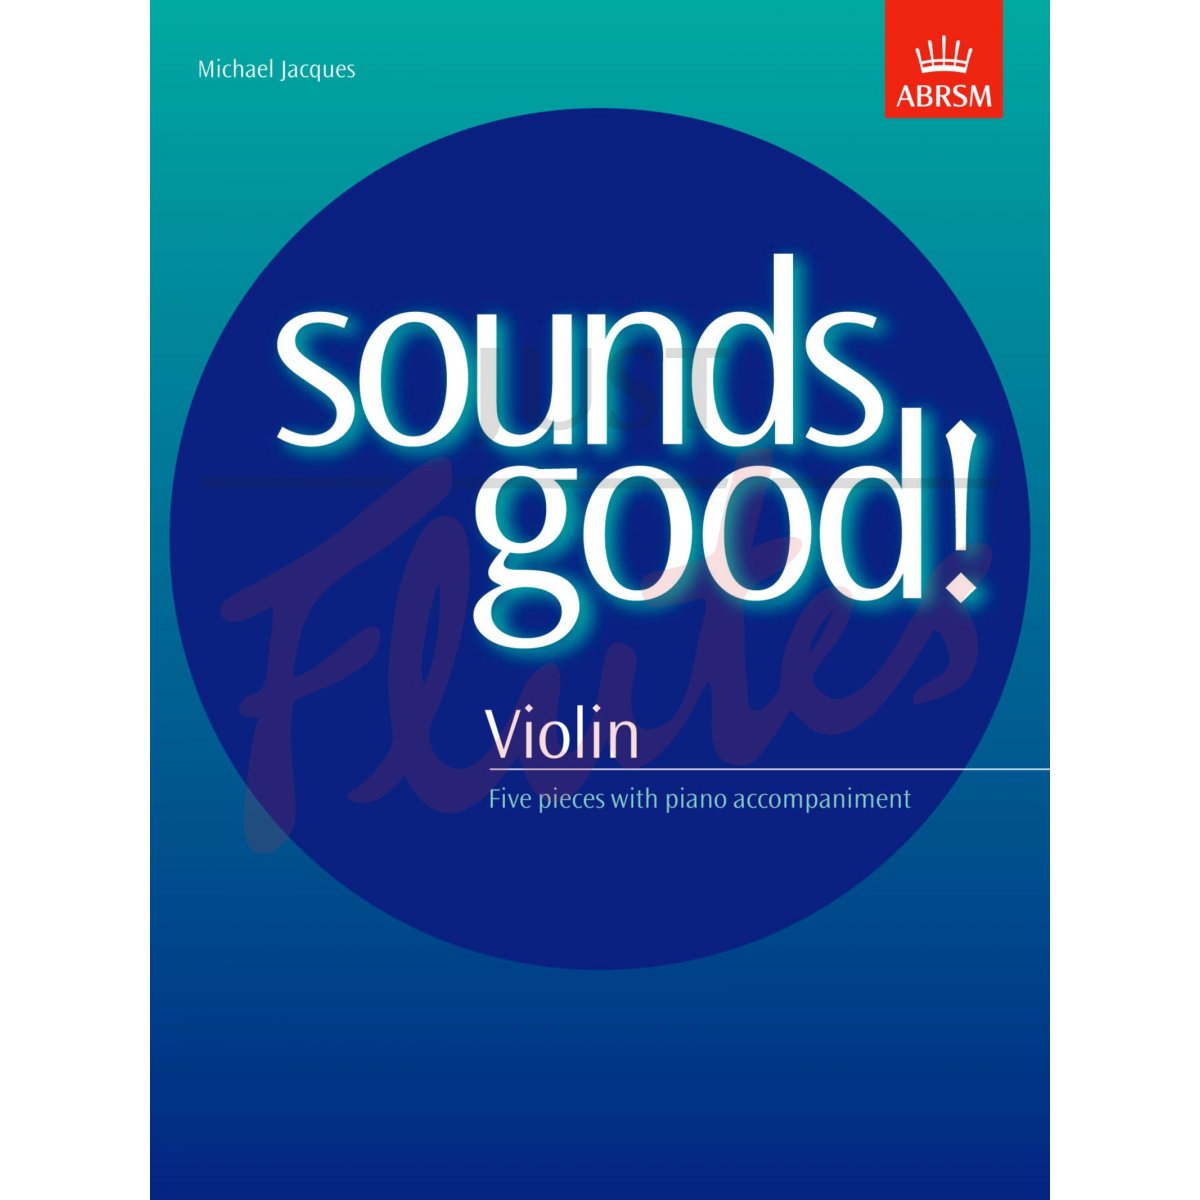 Sounds Good! for Violin